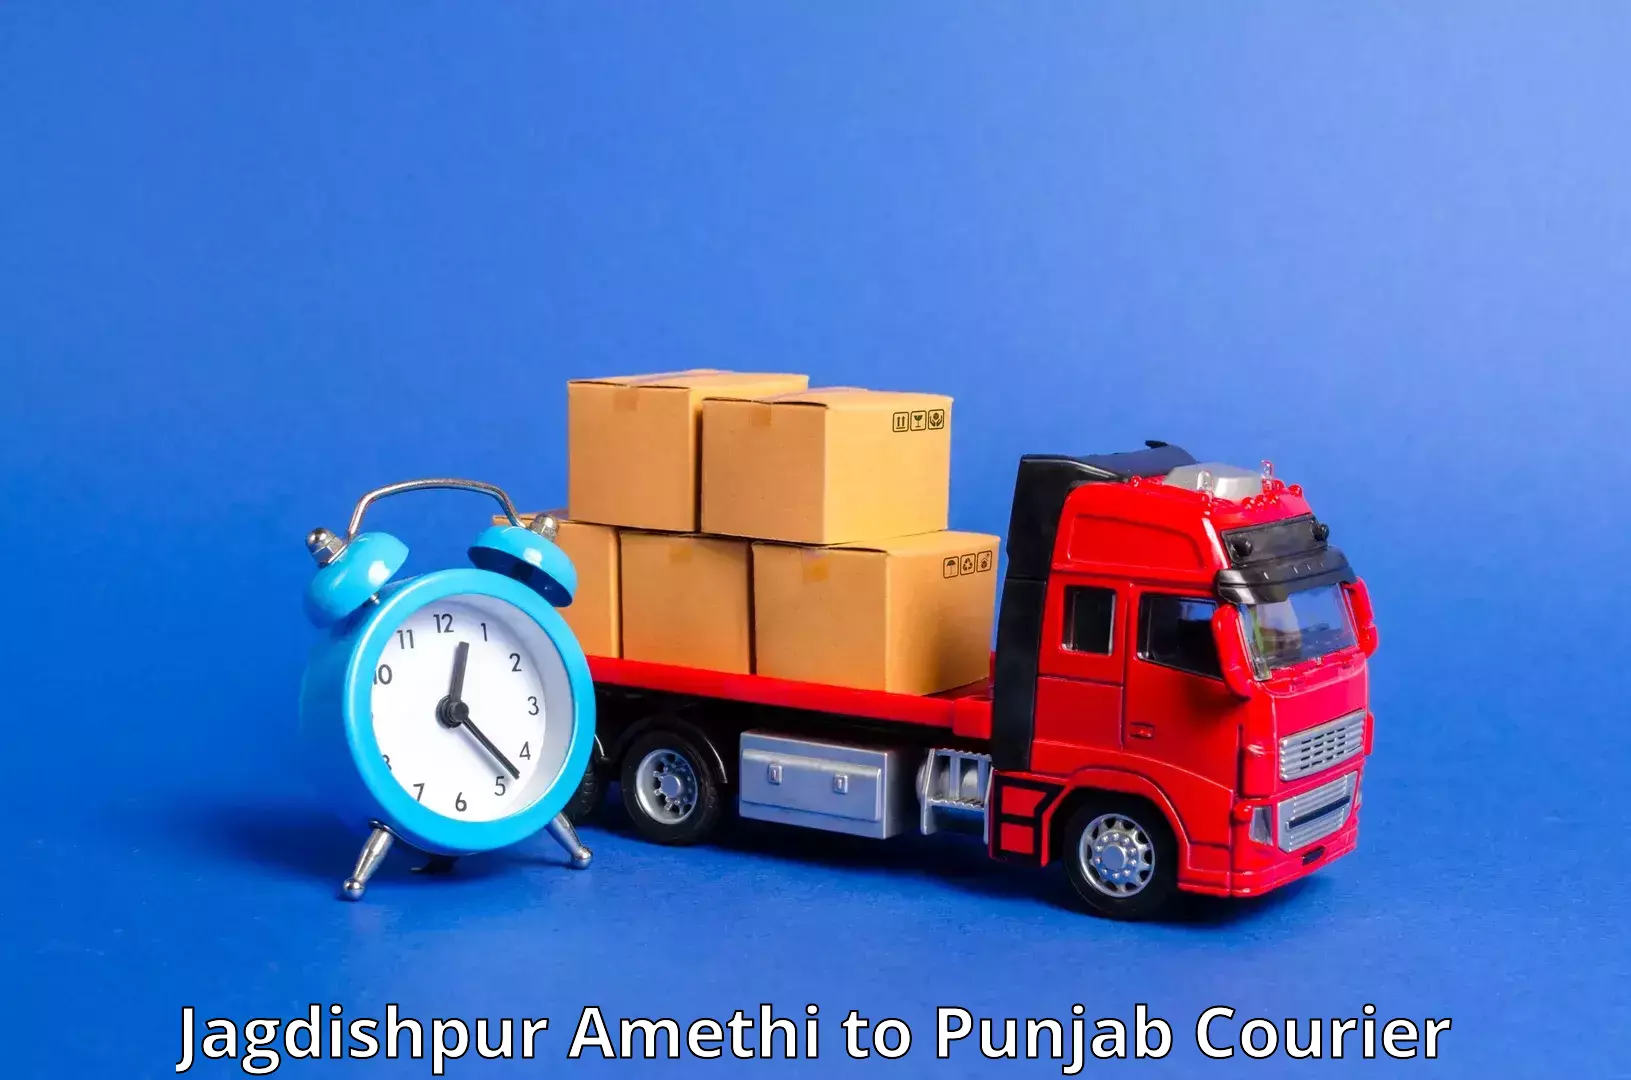 Courier service innovation Jagdishpur Amethi to Dhuri